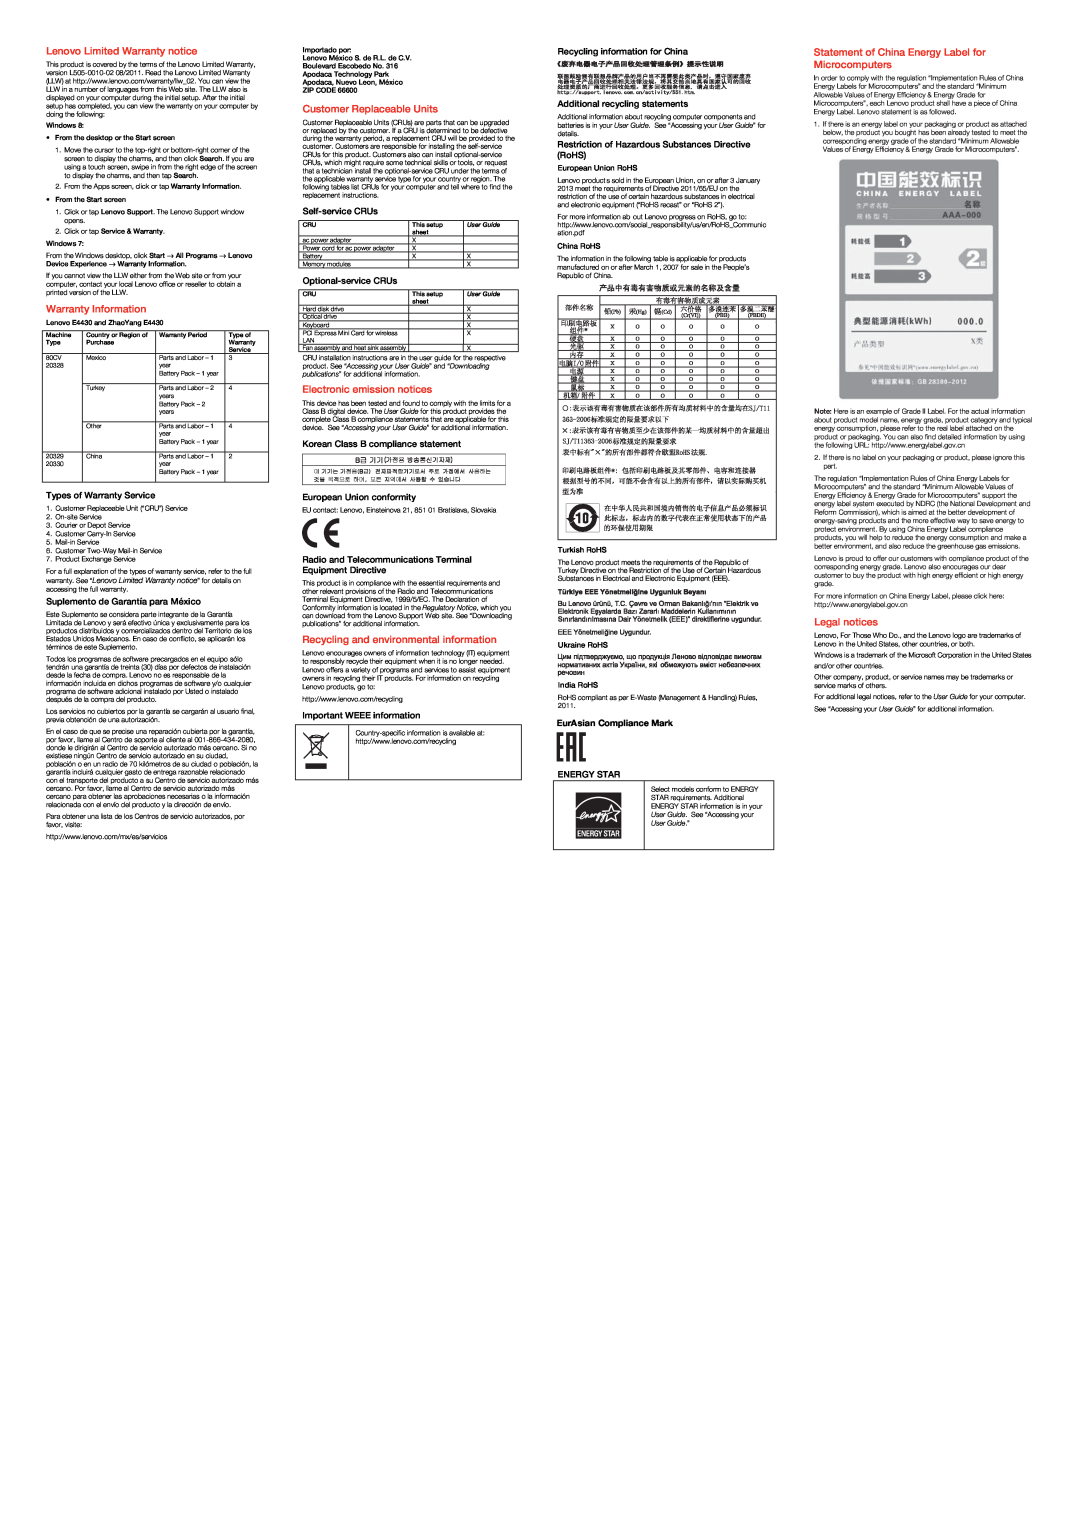 Lenovo E4430 Lenovo Limited Warranty notice, Warranty Information, Customer Replaceable Units, Electronic emission notices 